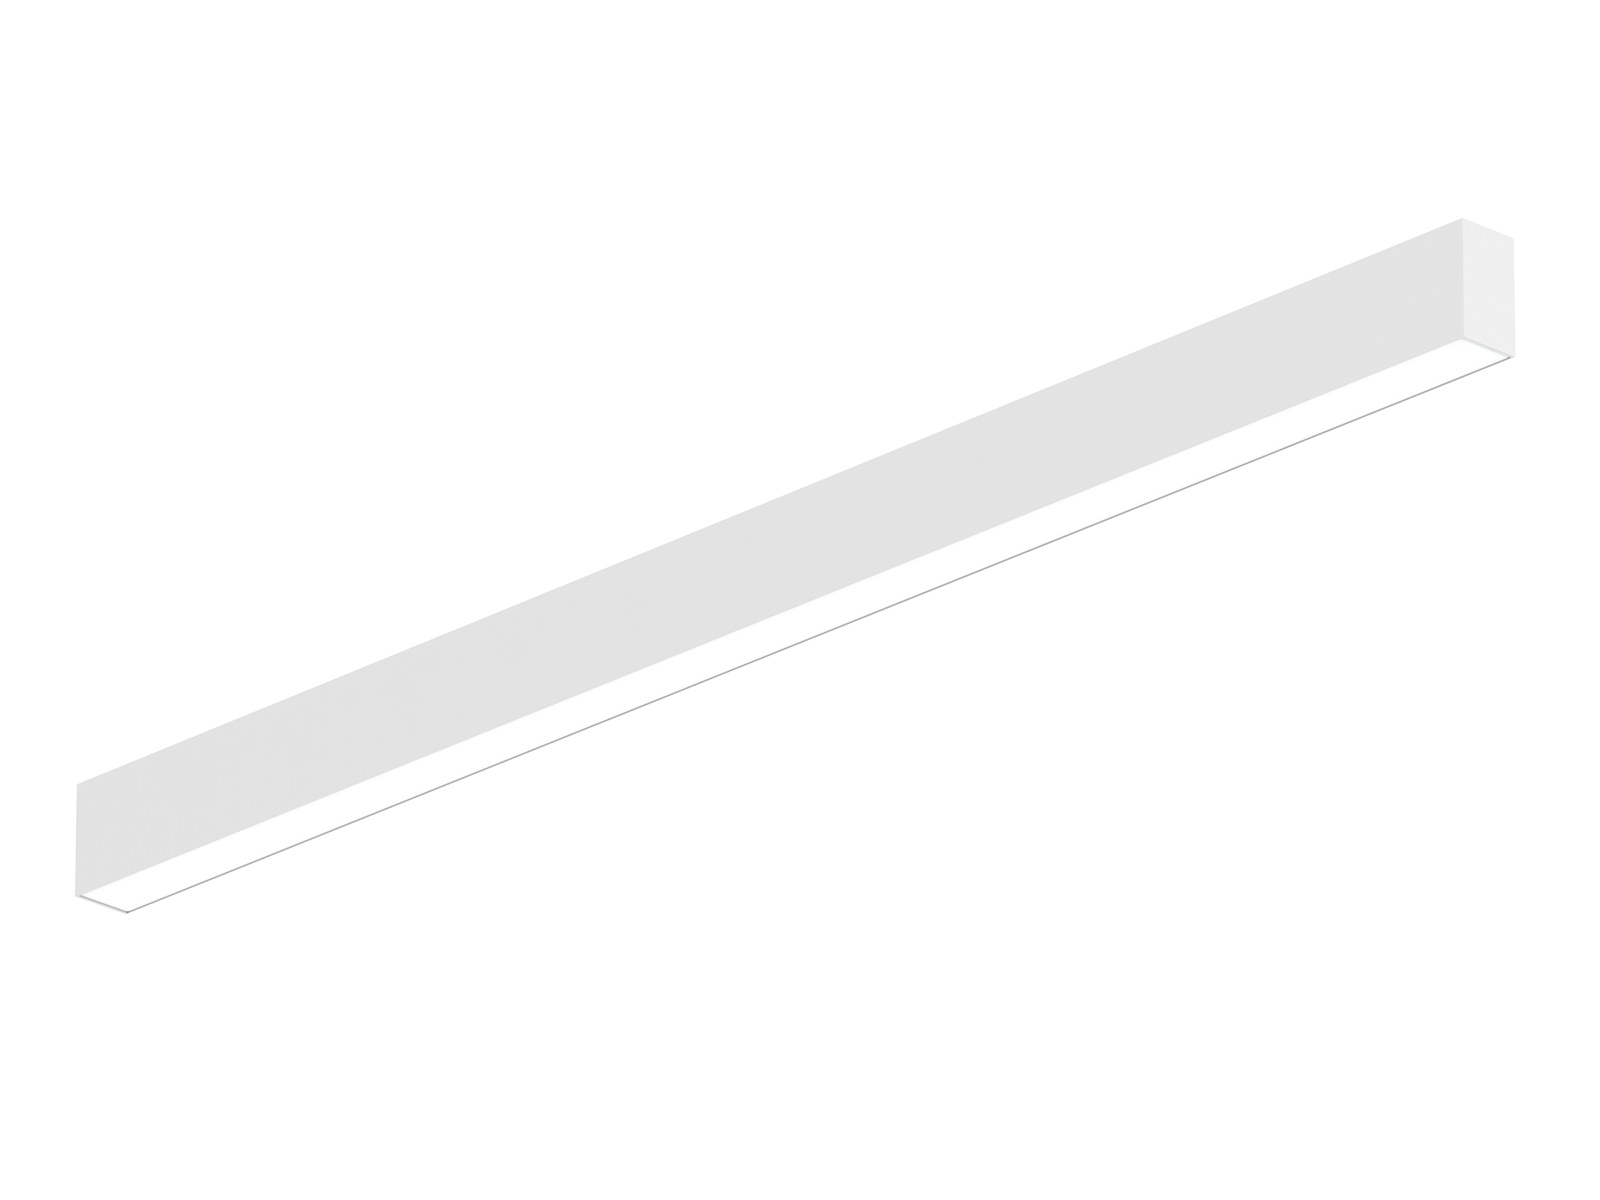 DB143 LED Linear Light